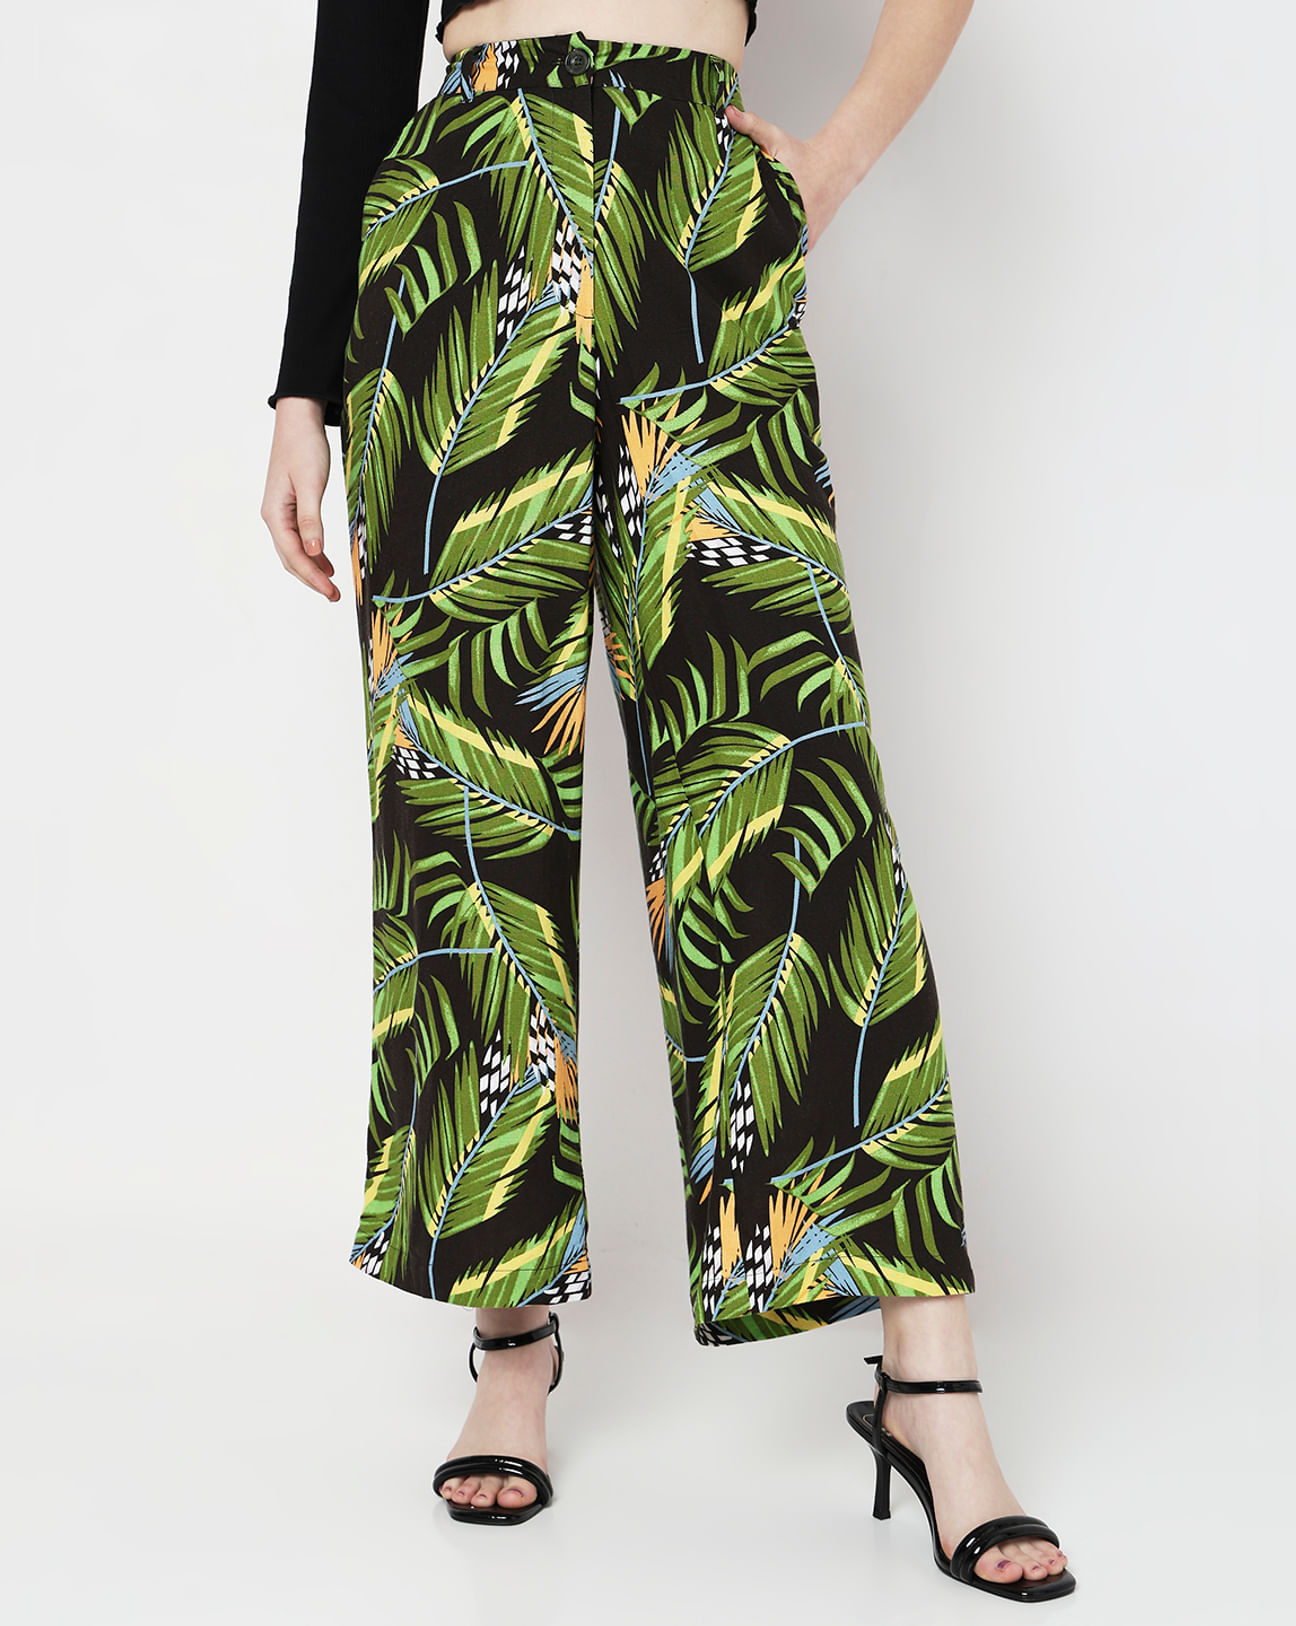 Green High Rise Tropical Print Pants